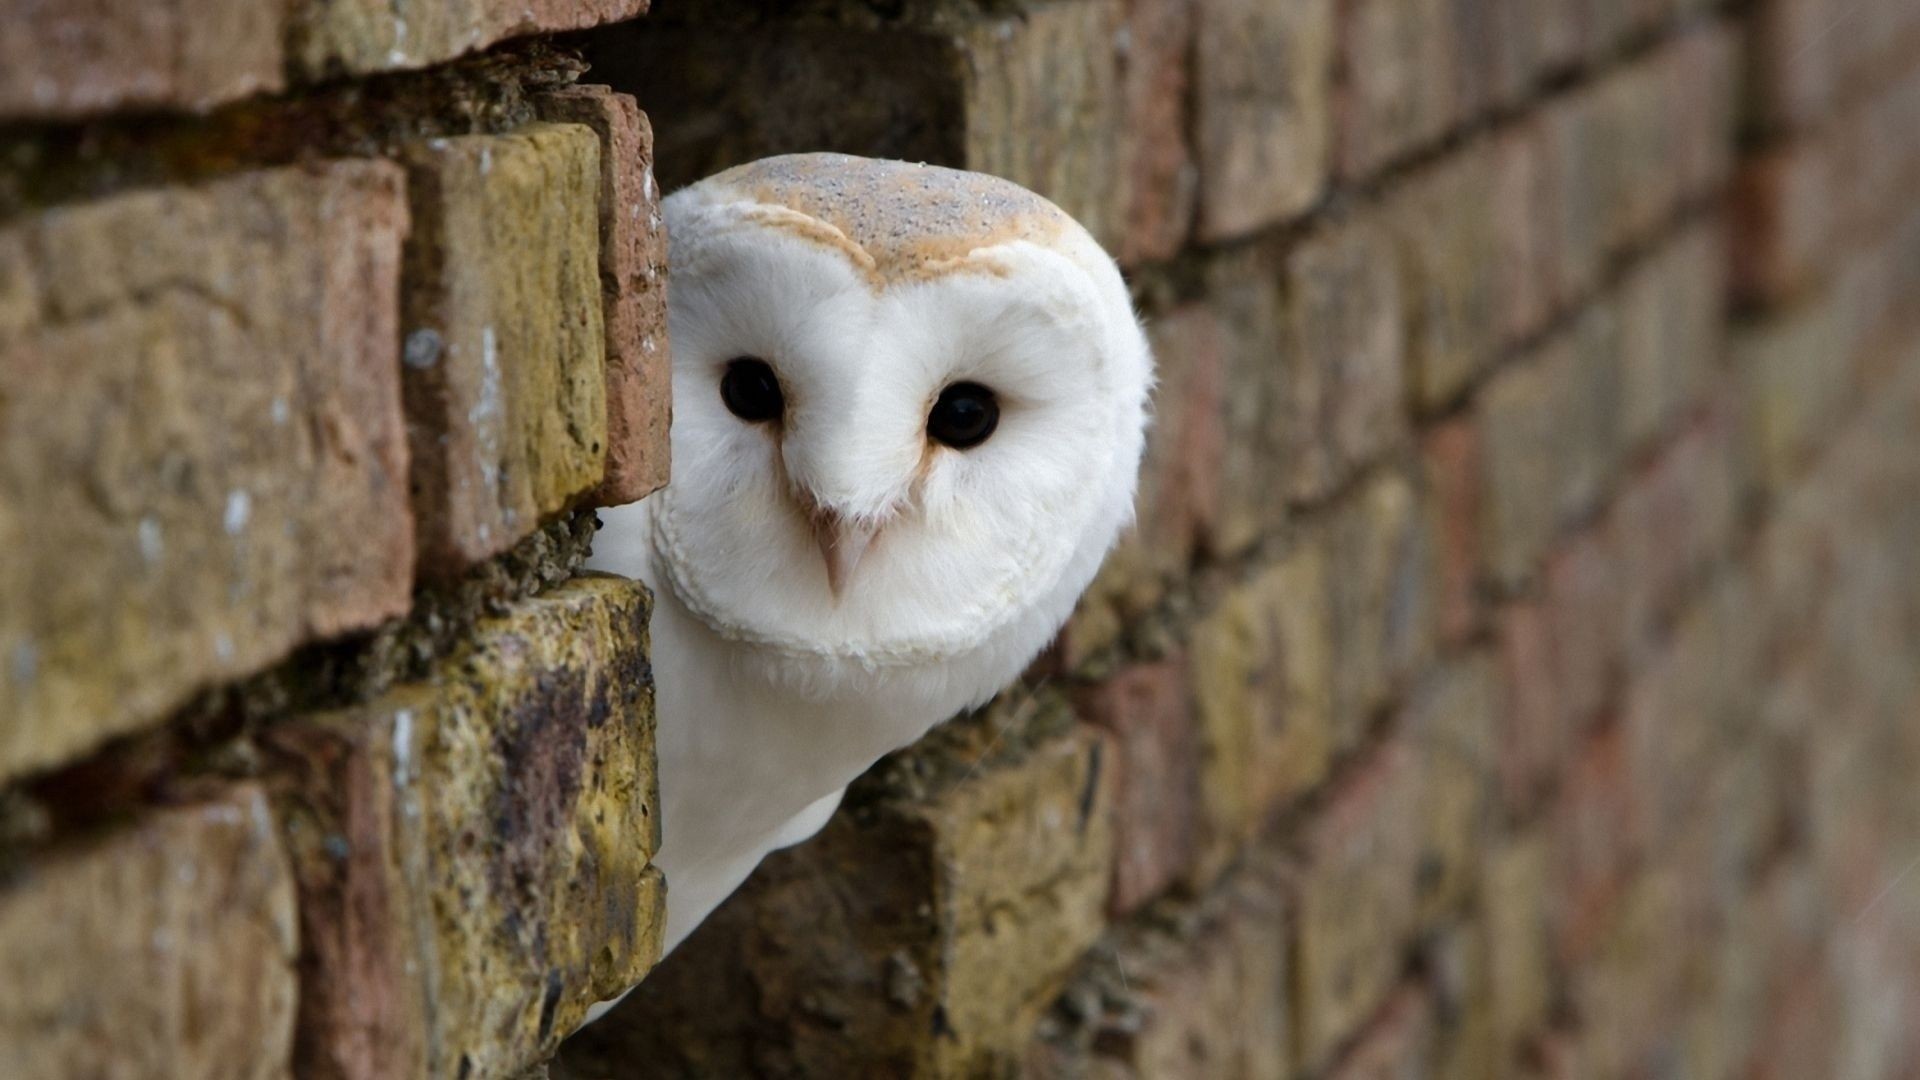 Cute Owl Wallpaper For Desktop and You Like This Cute Bird Wallpaper